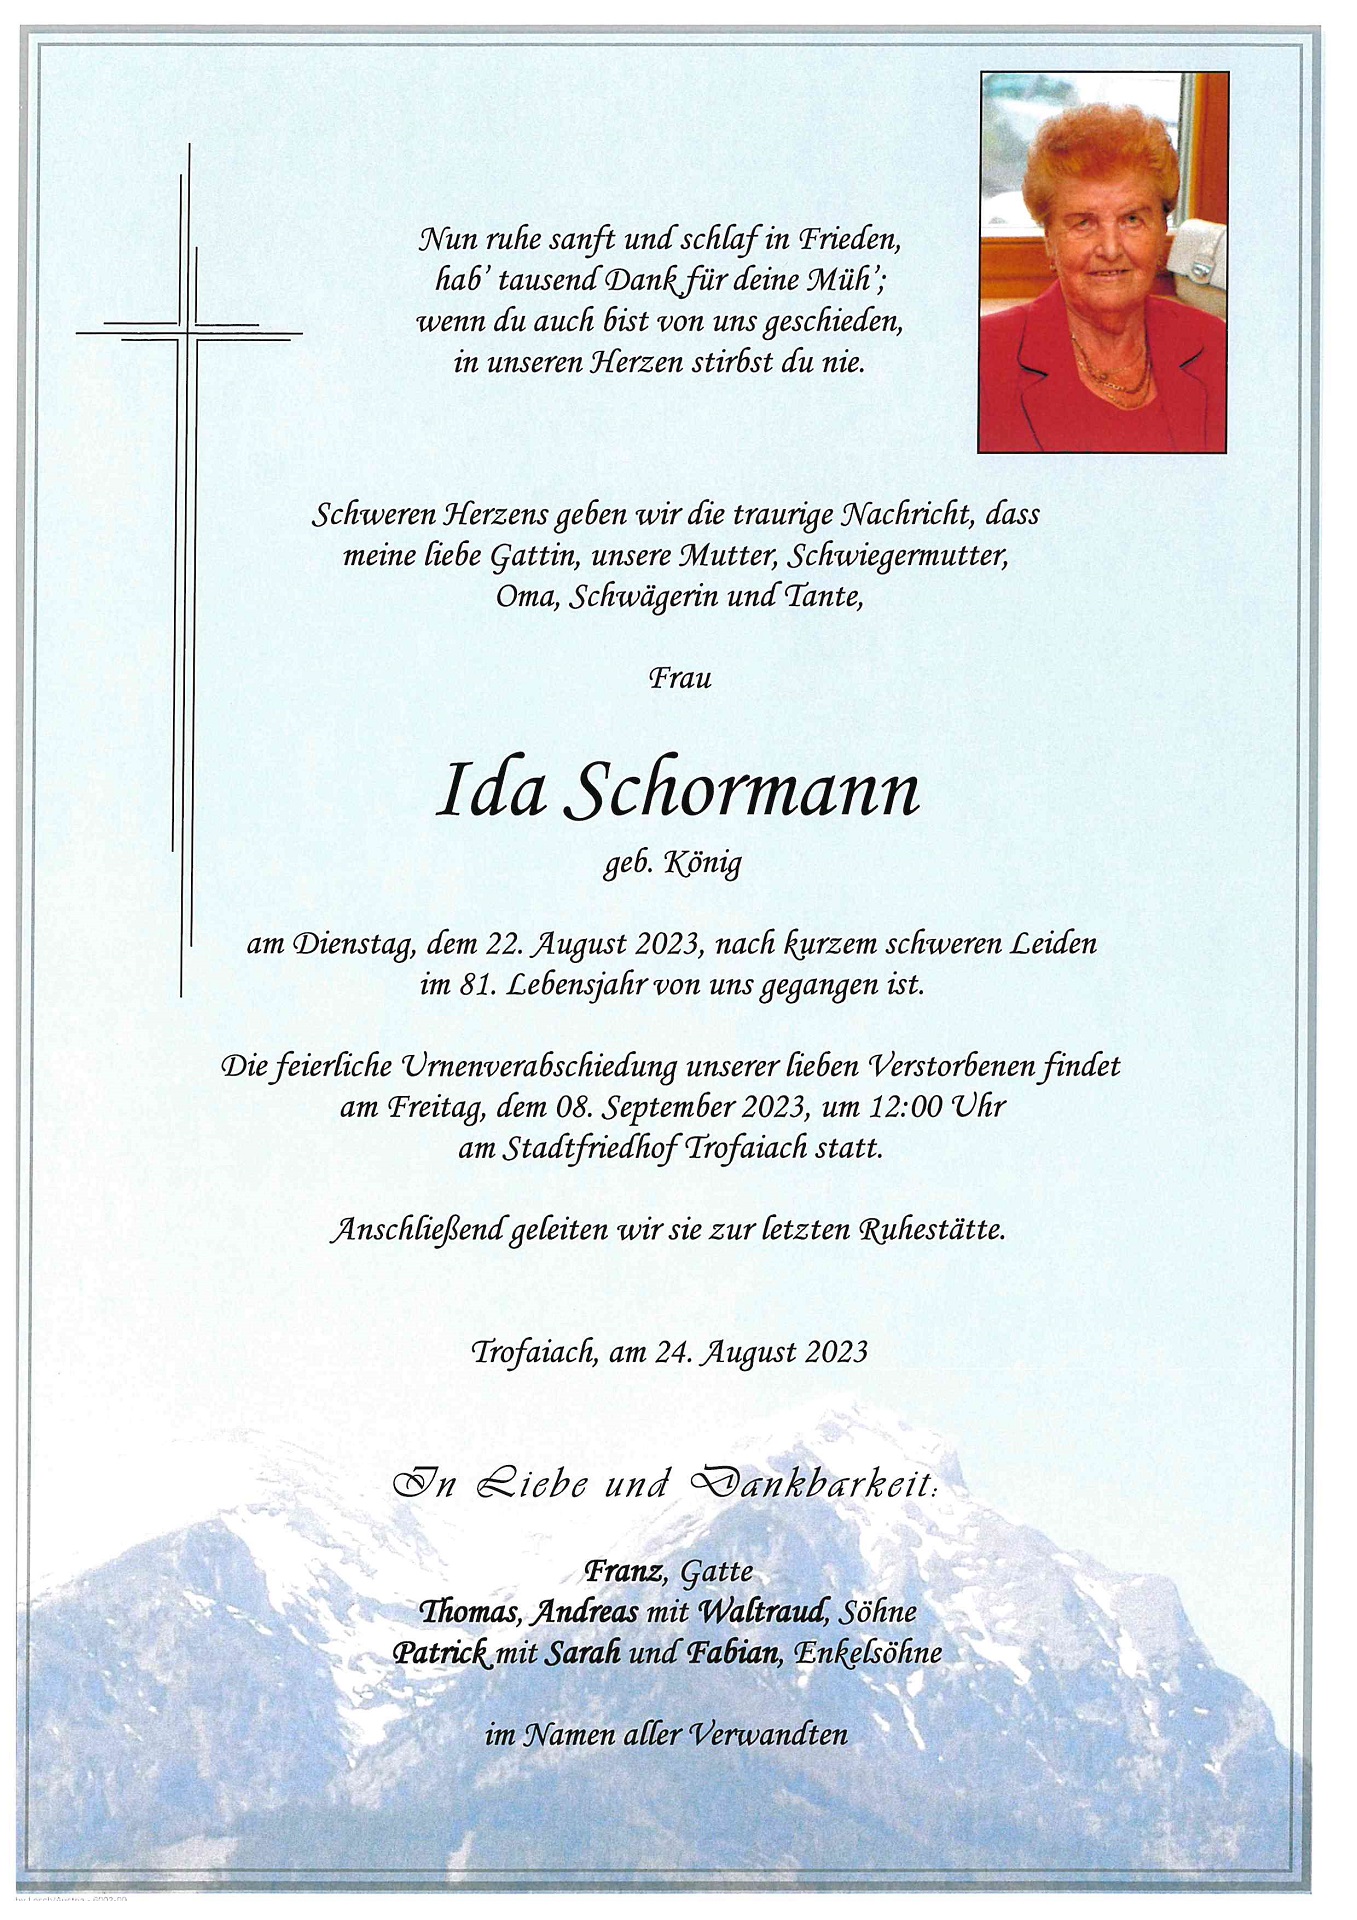 Schormann Ida